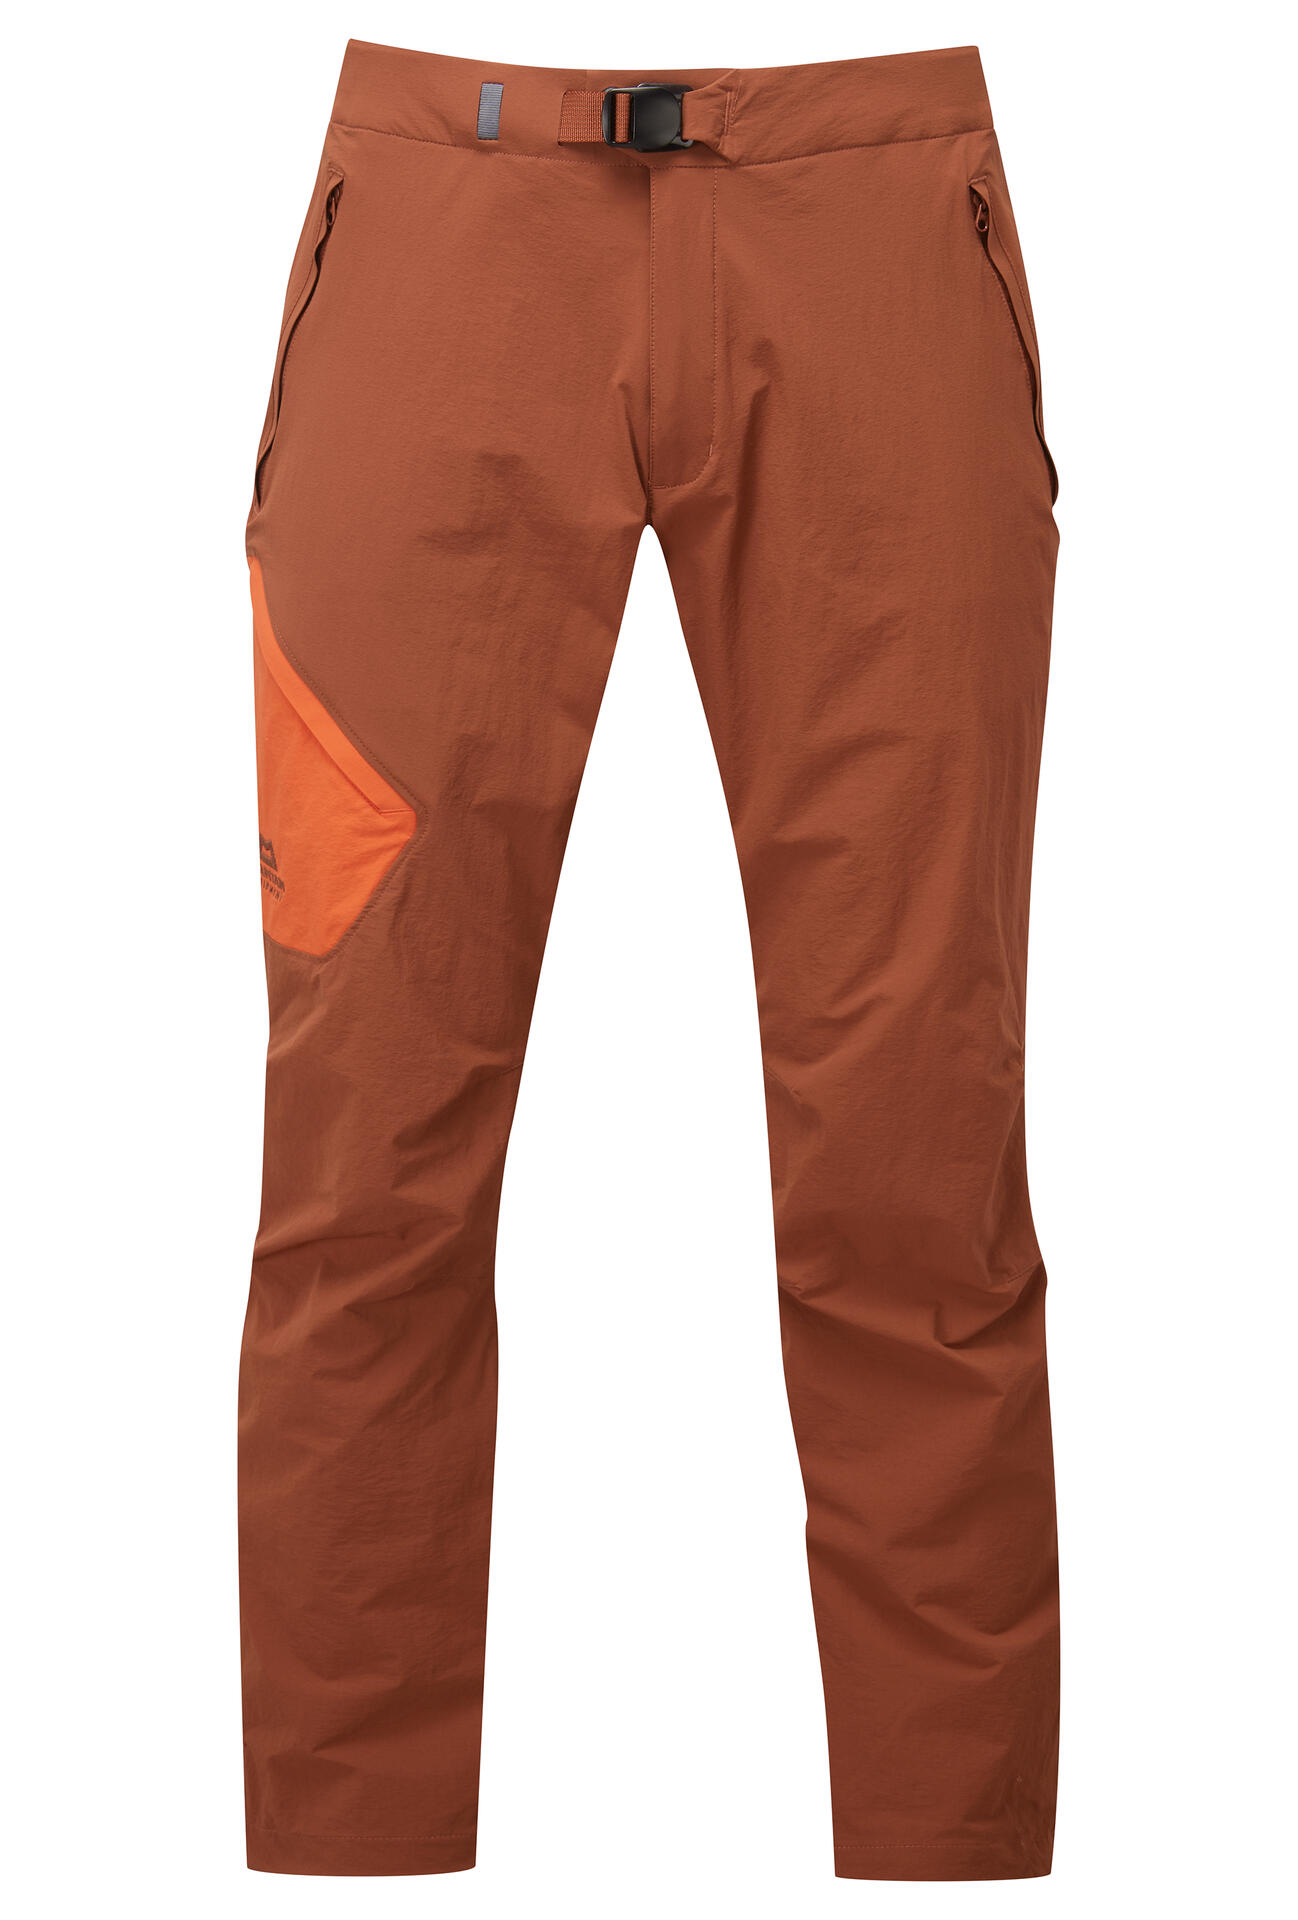 Mountain Equipment Comici Pant (Ac) Men'S - zkrácené nohavice Barva: Burnt Henna/Cardinal Orange, Velikost: L